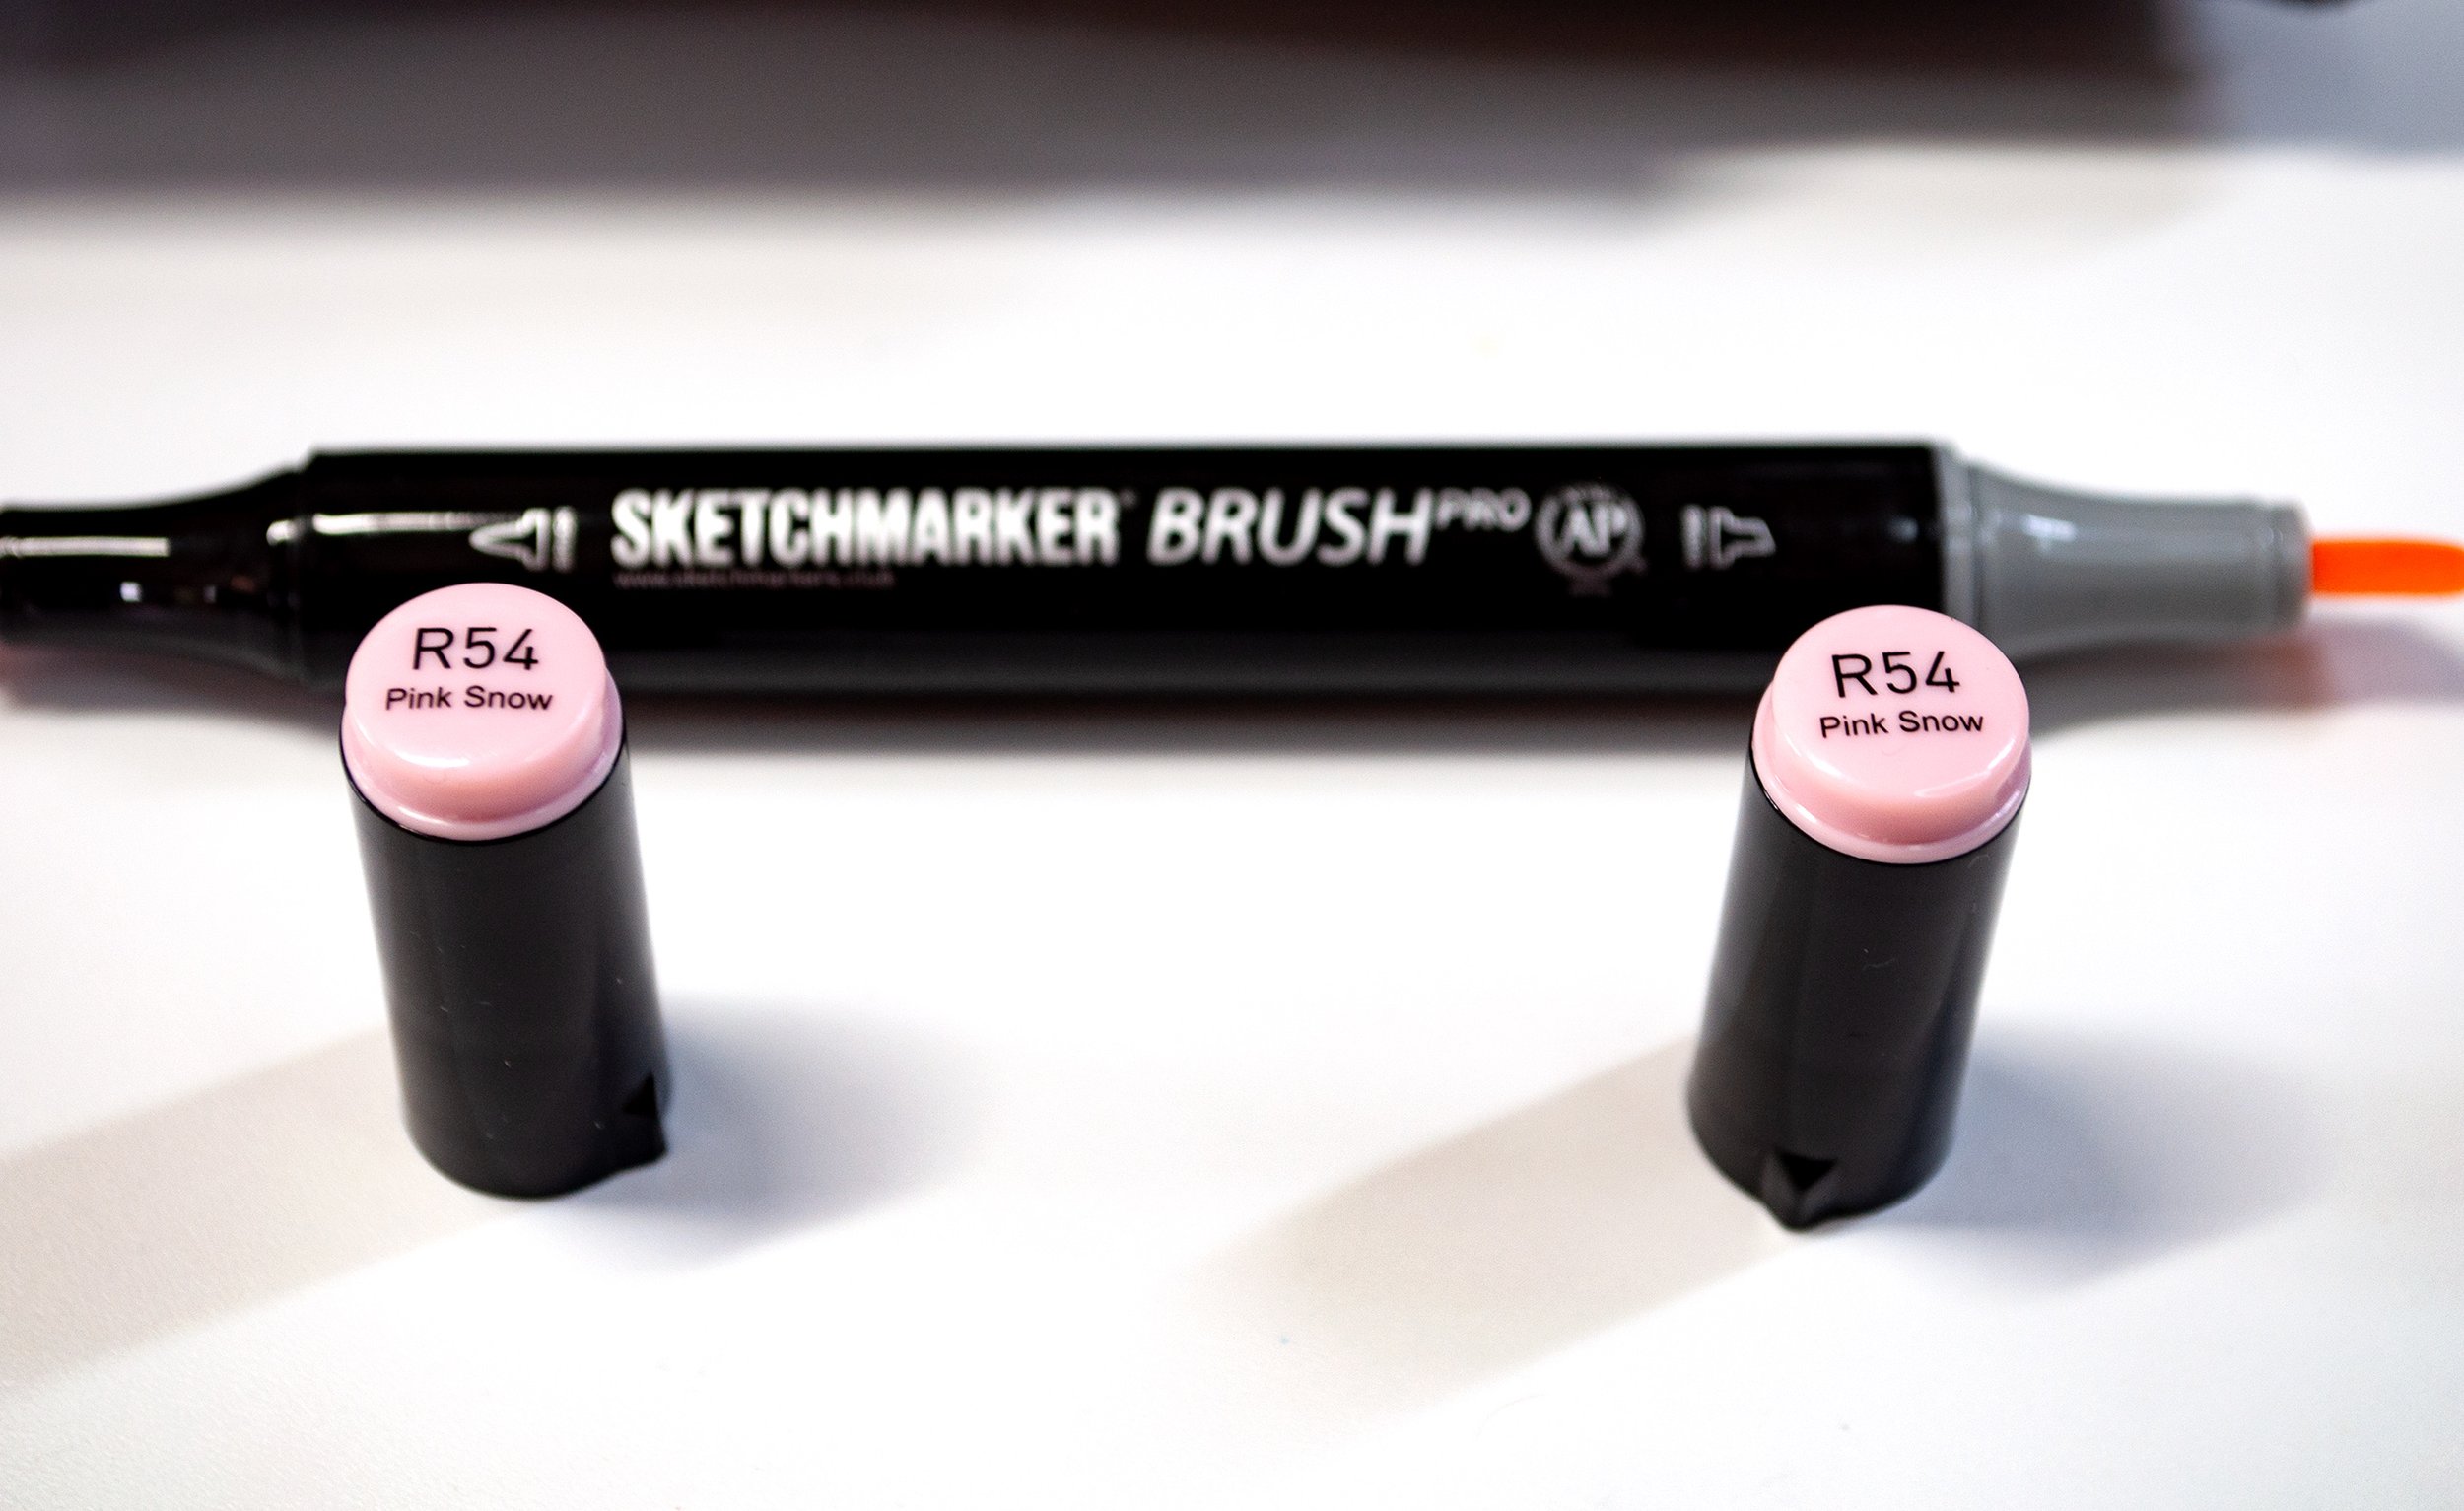 Sketchmarker Club BrushPro Marker Review and Sketchmarker Liners